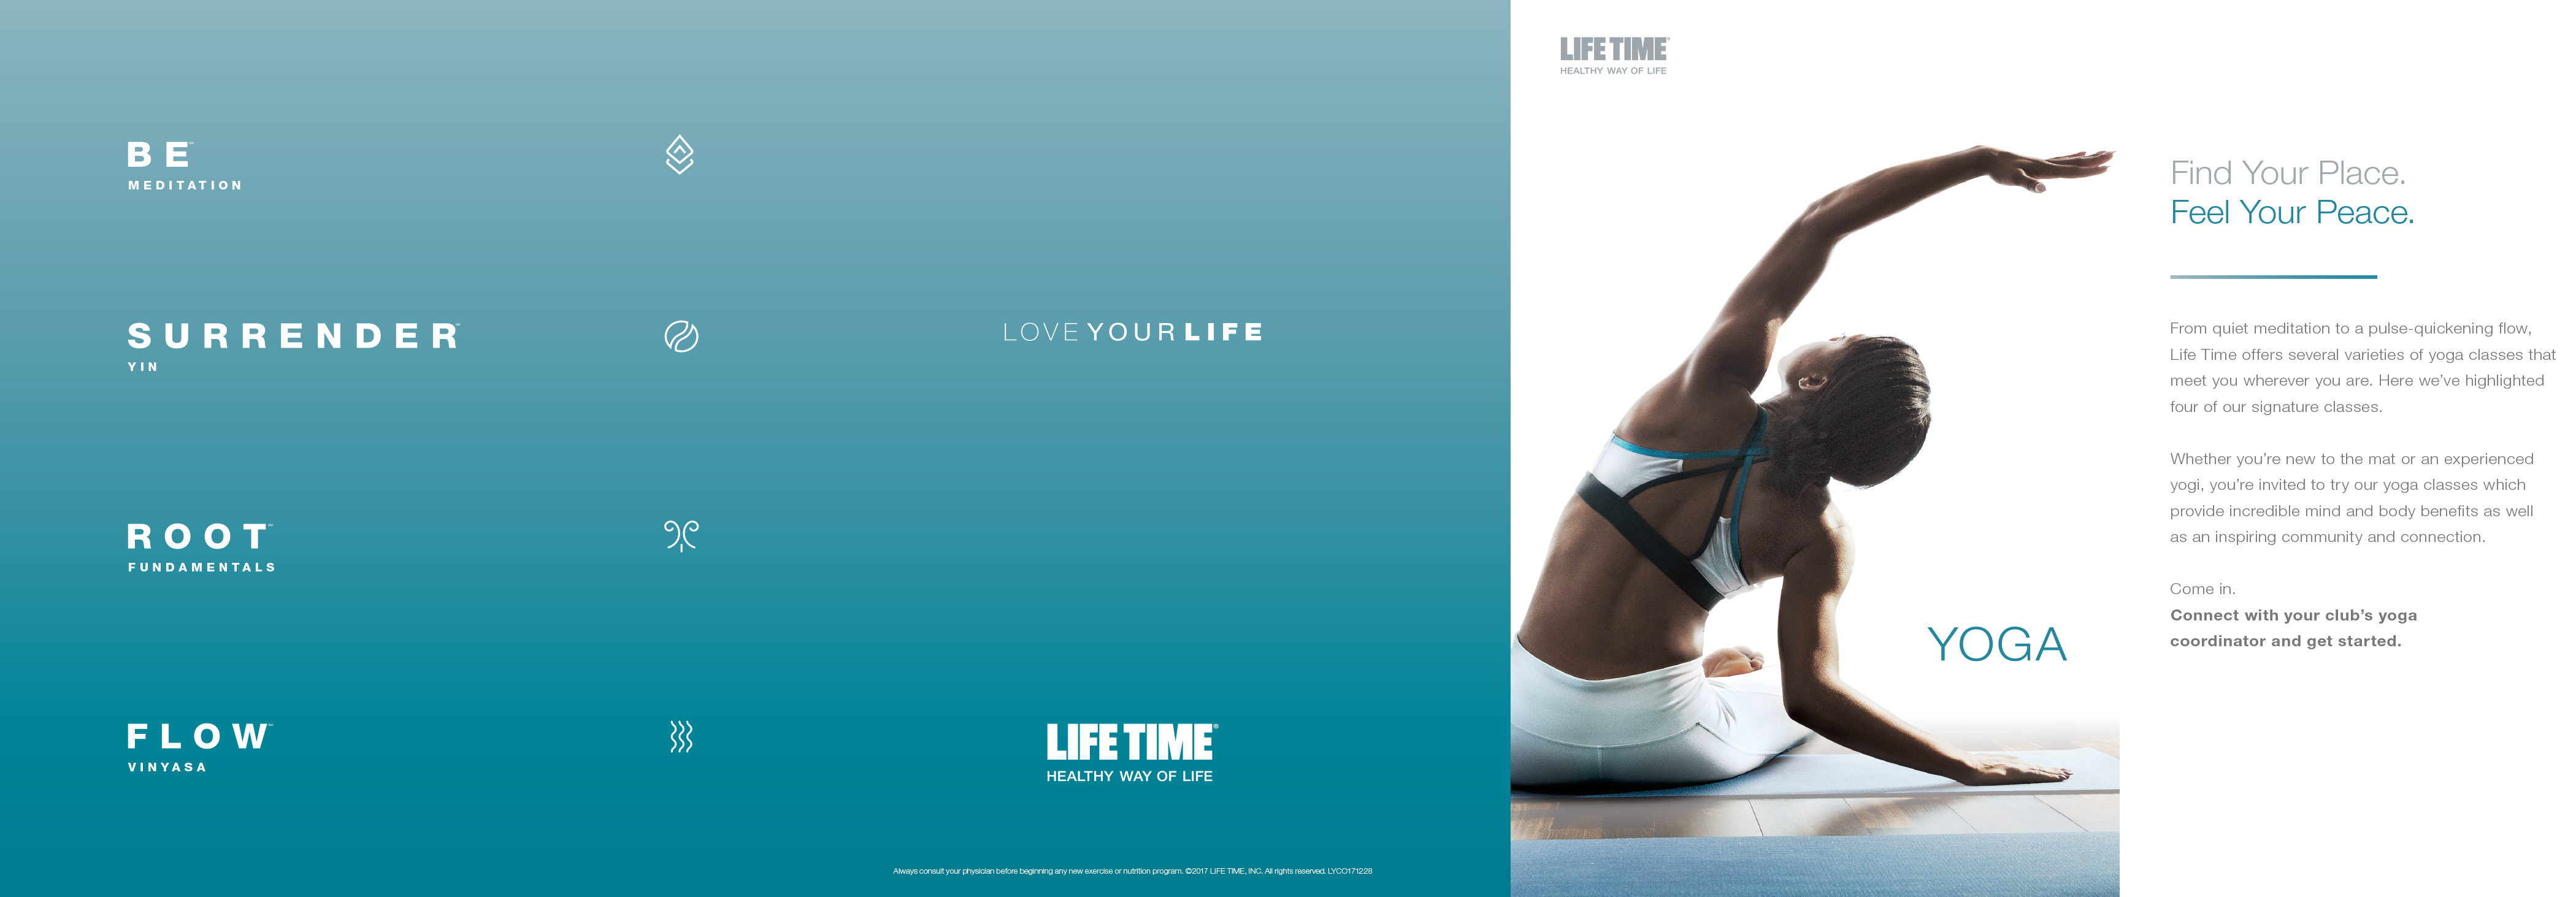 Life Time Yoga By Derek Wallen On Dribbble